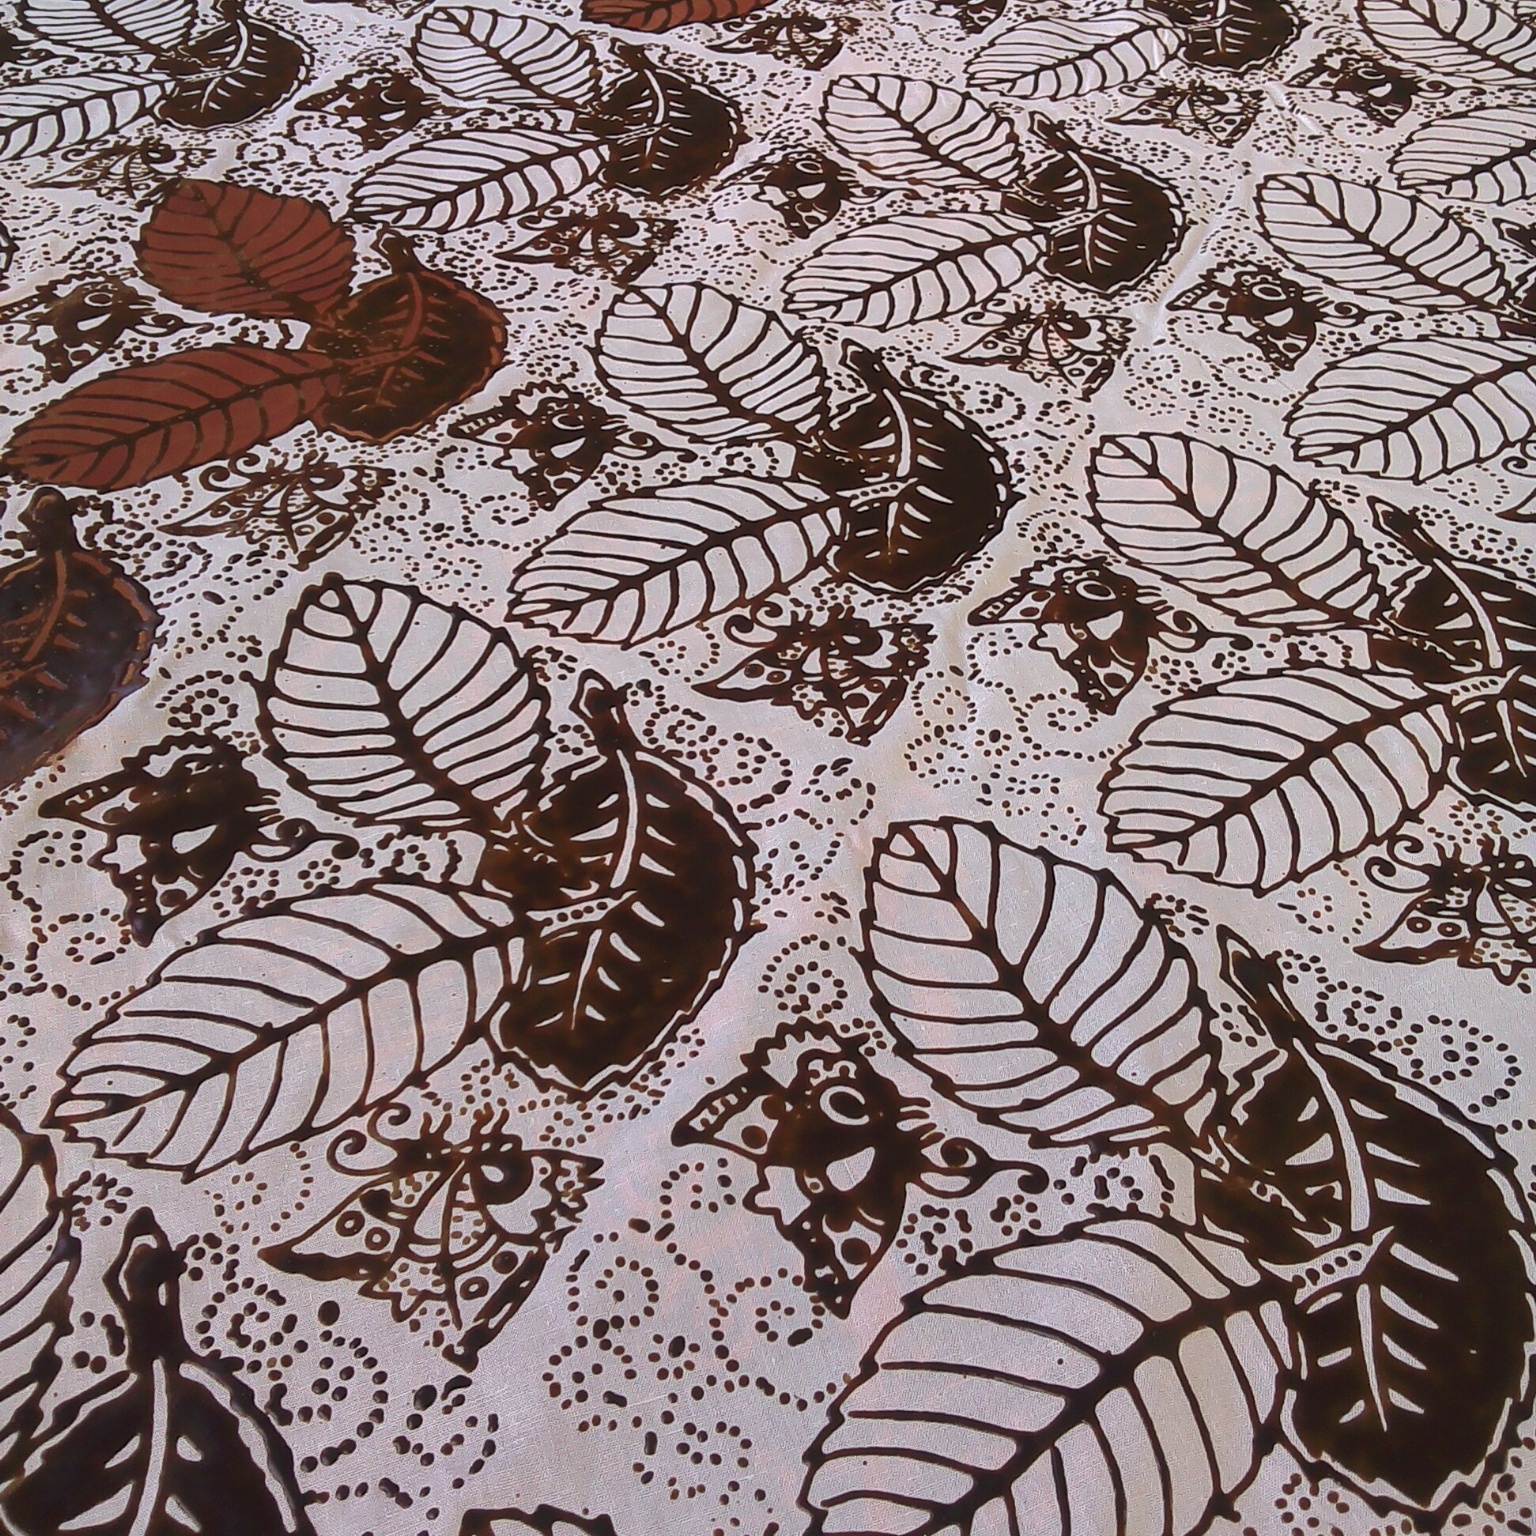  Gambar Batik Daun  Simpor Contoh Motif Batik 